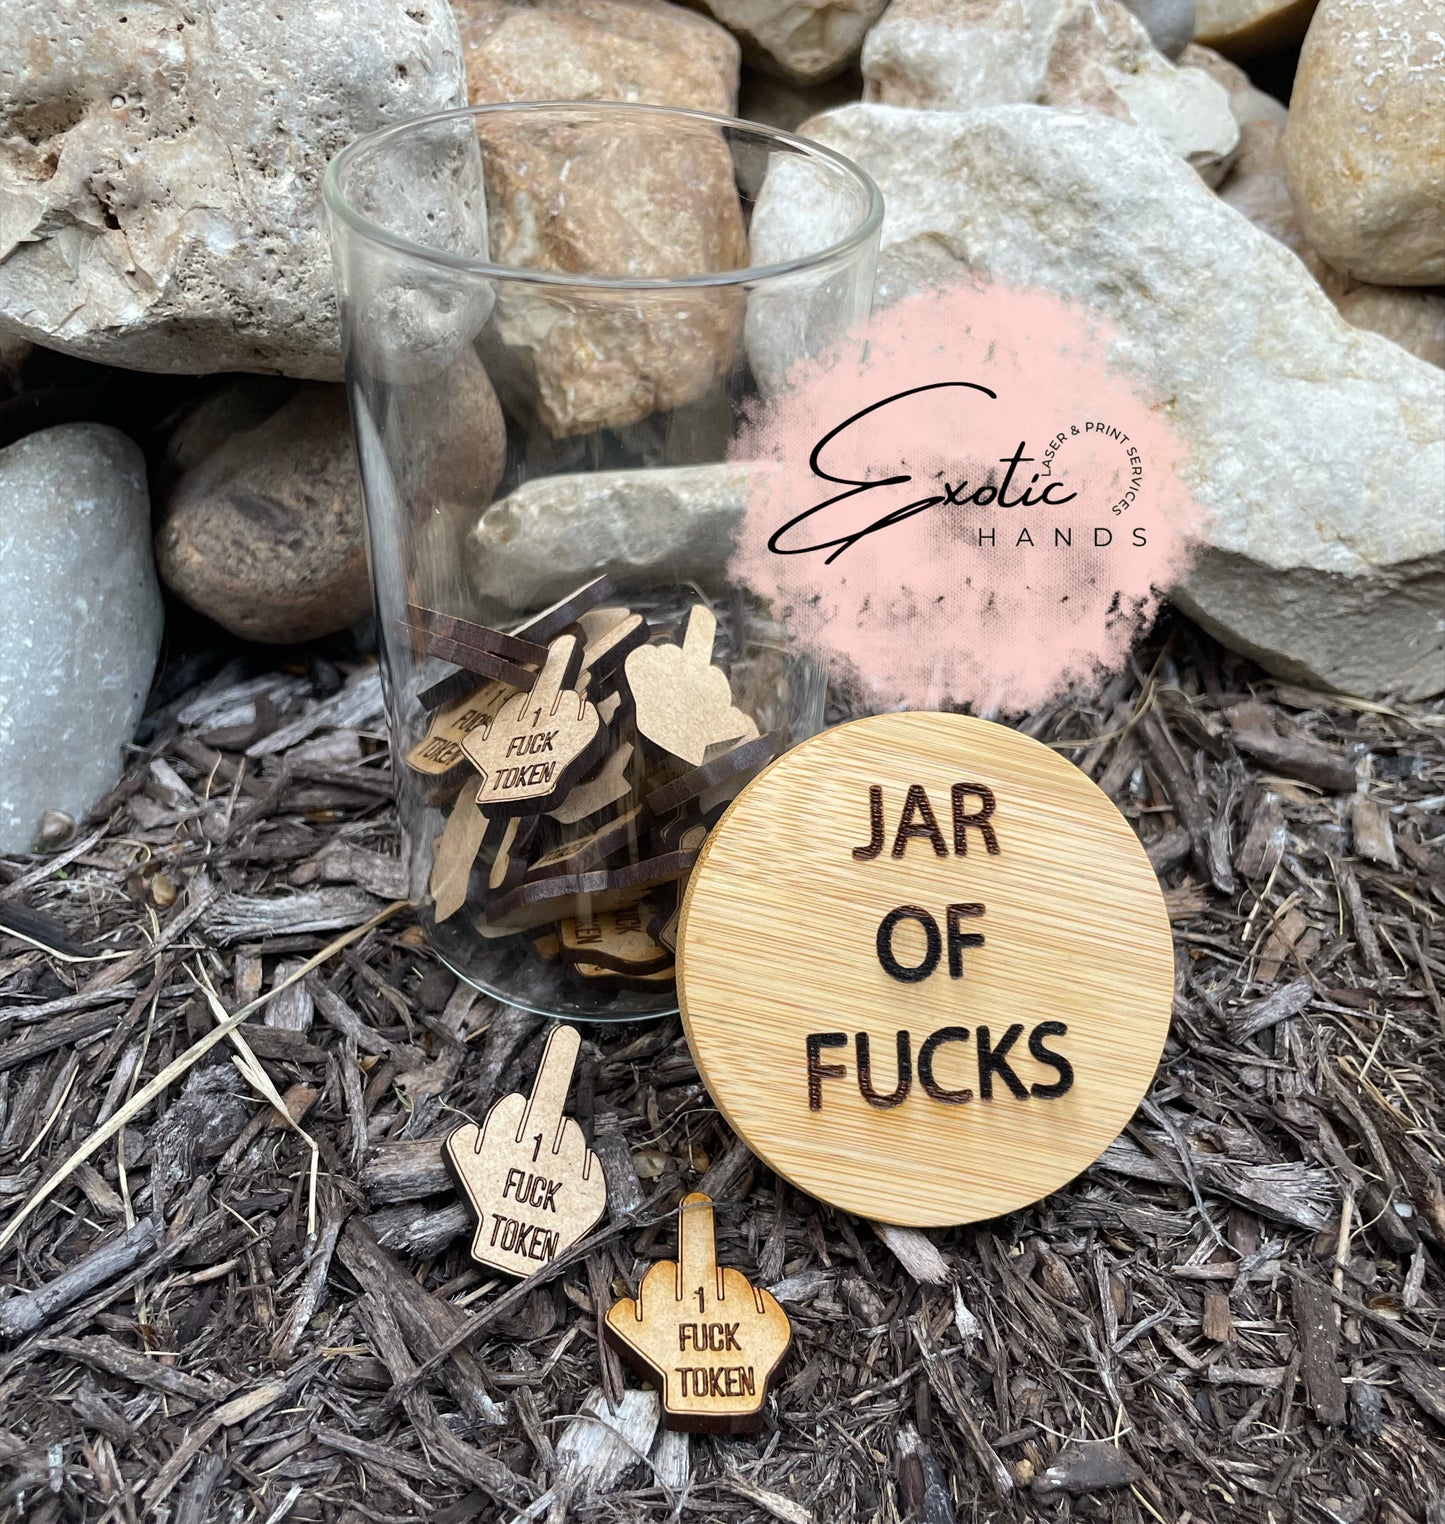 Jar of Fucks